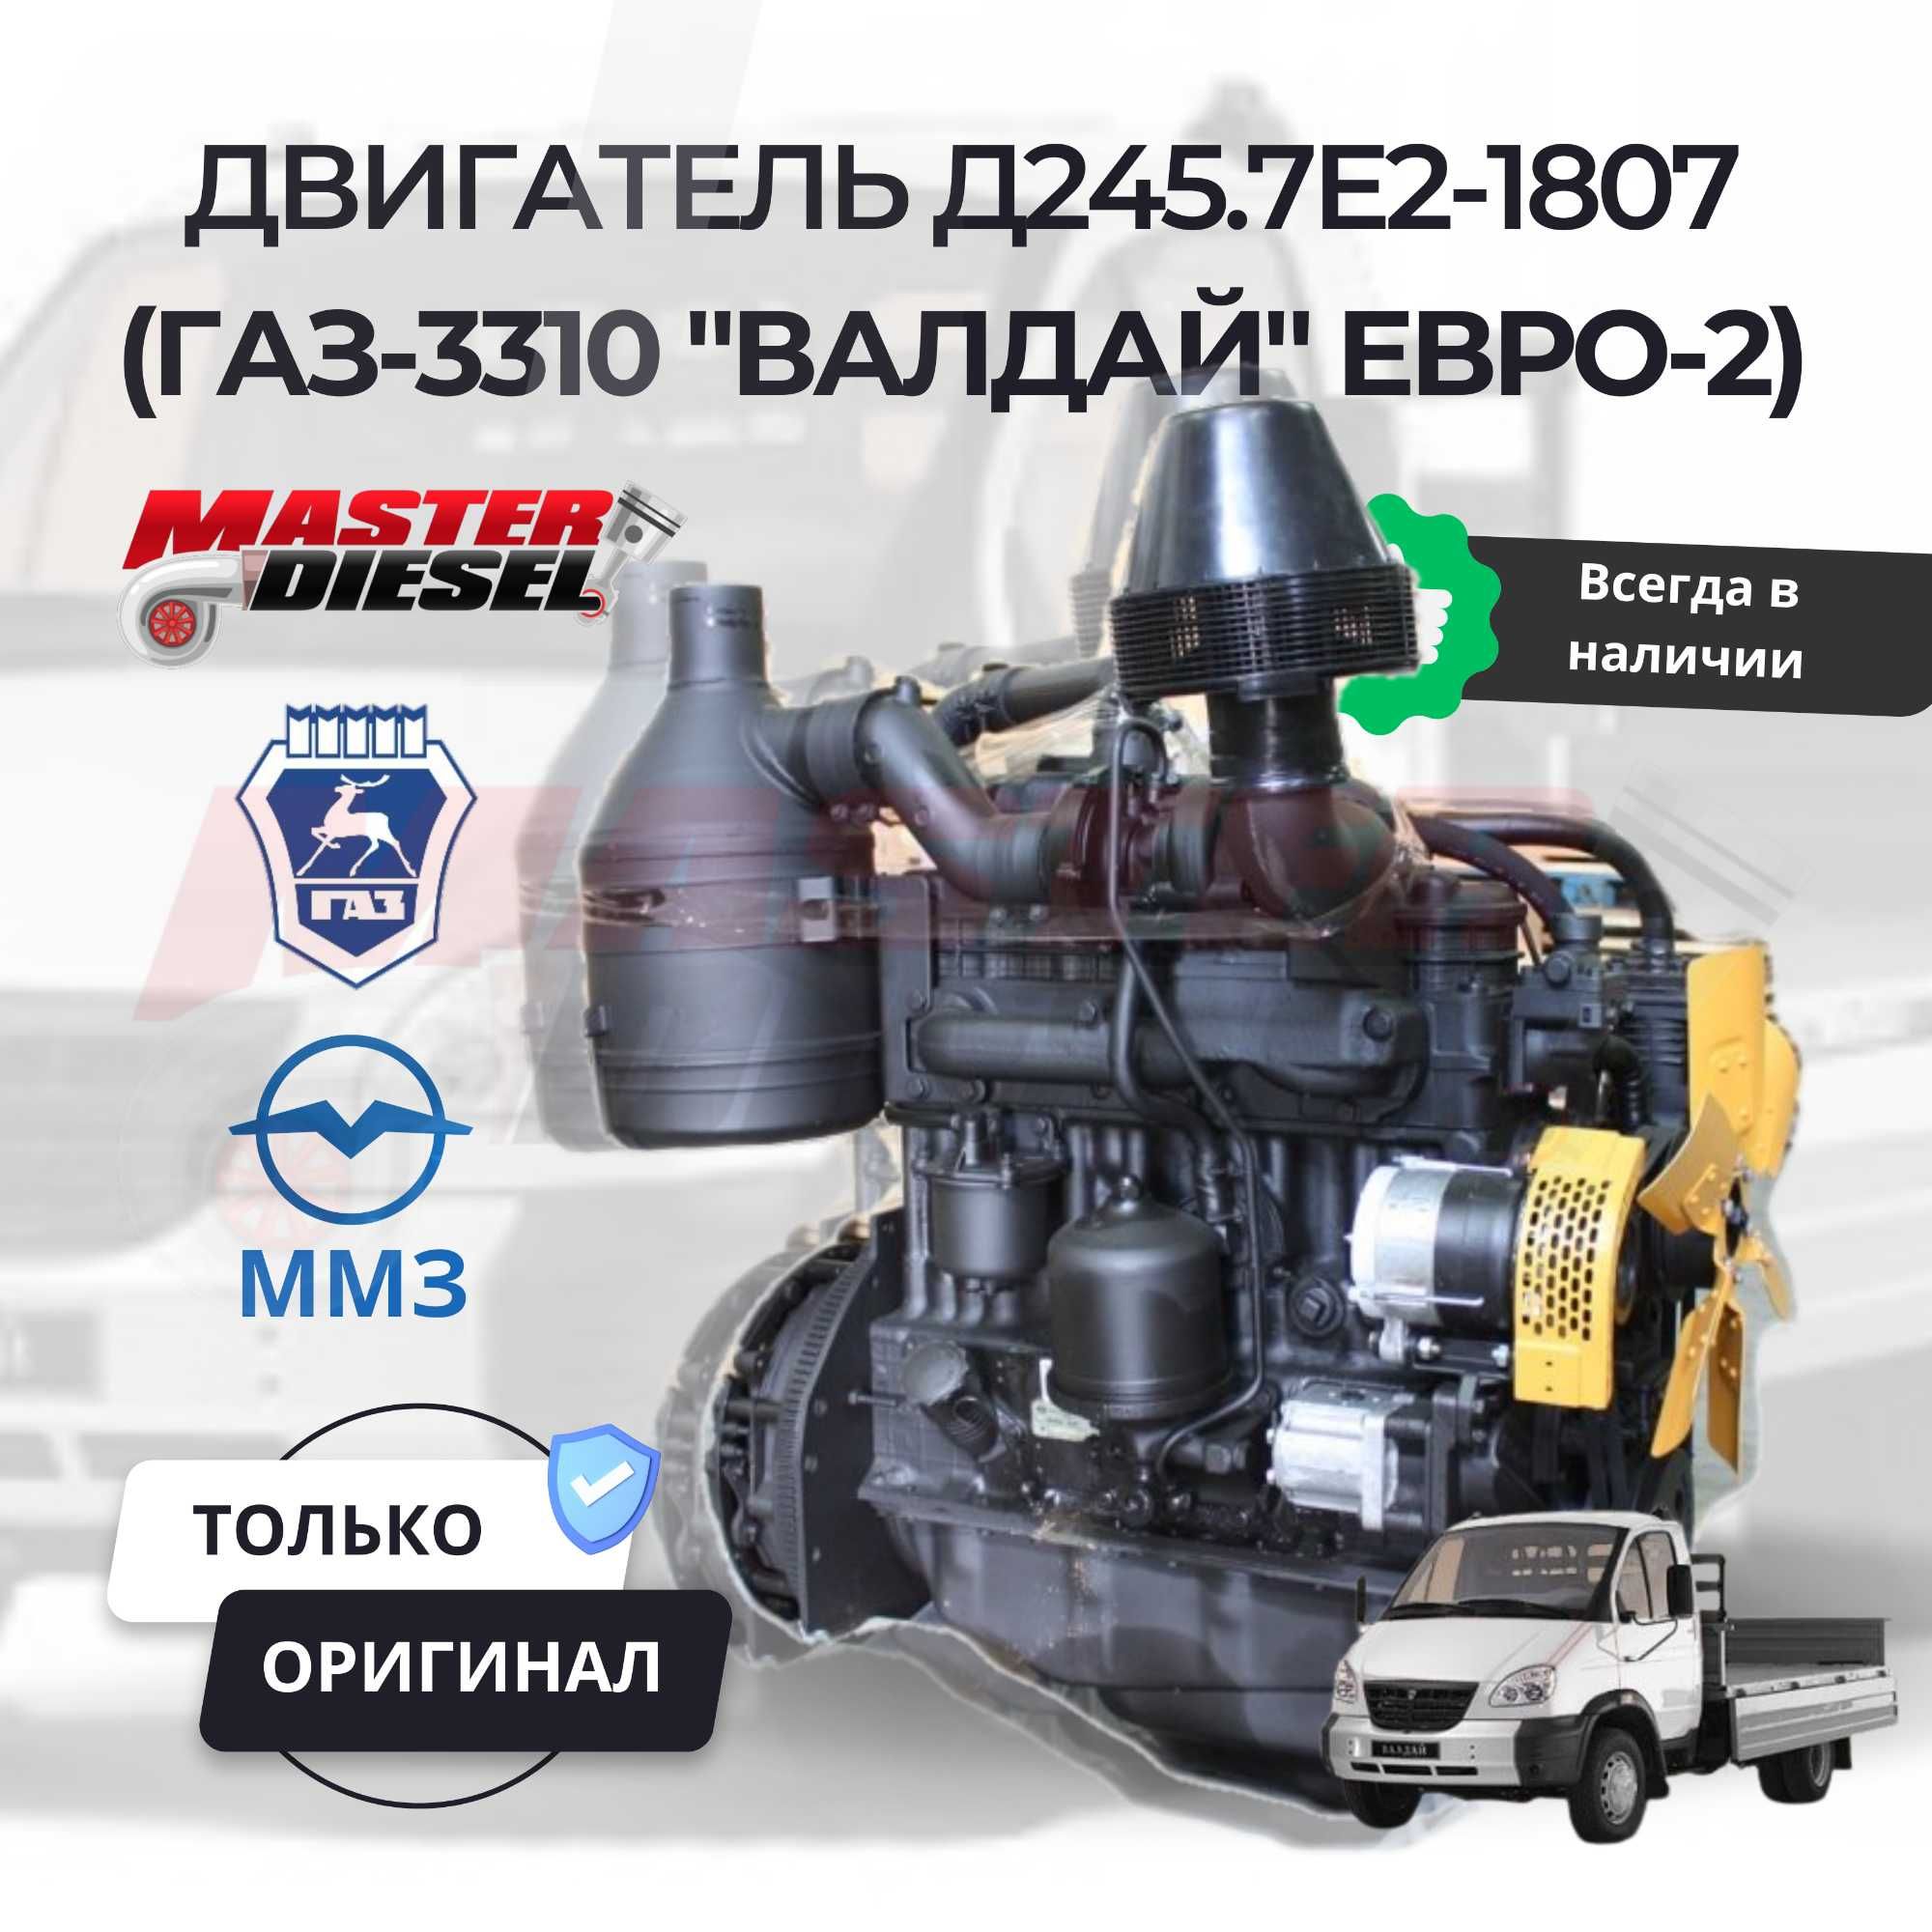 Двигатель Д-245 евро 2 ГАЗ